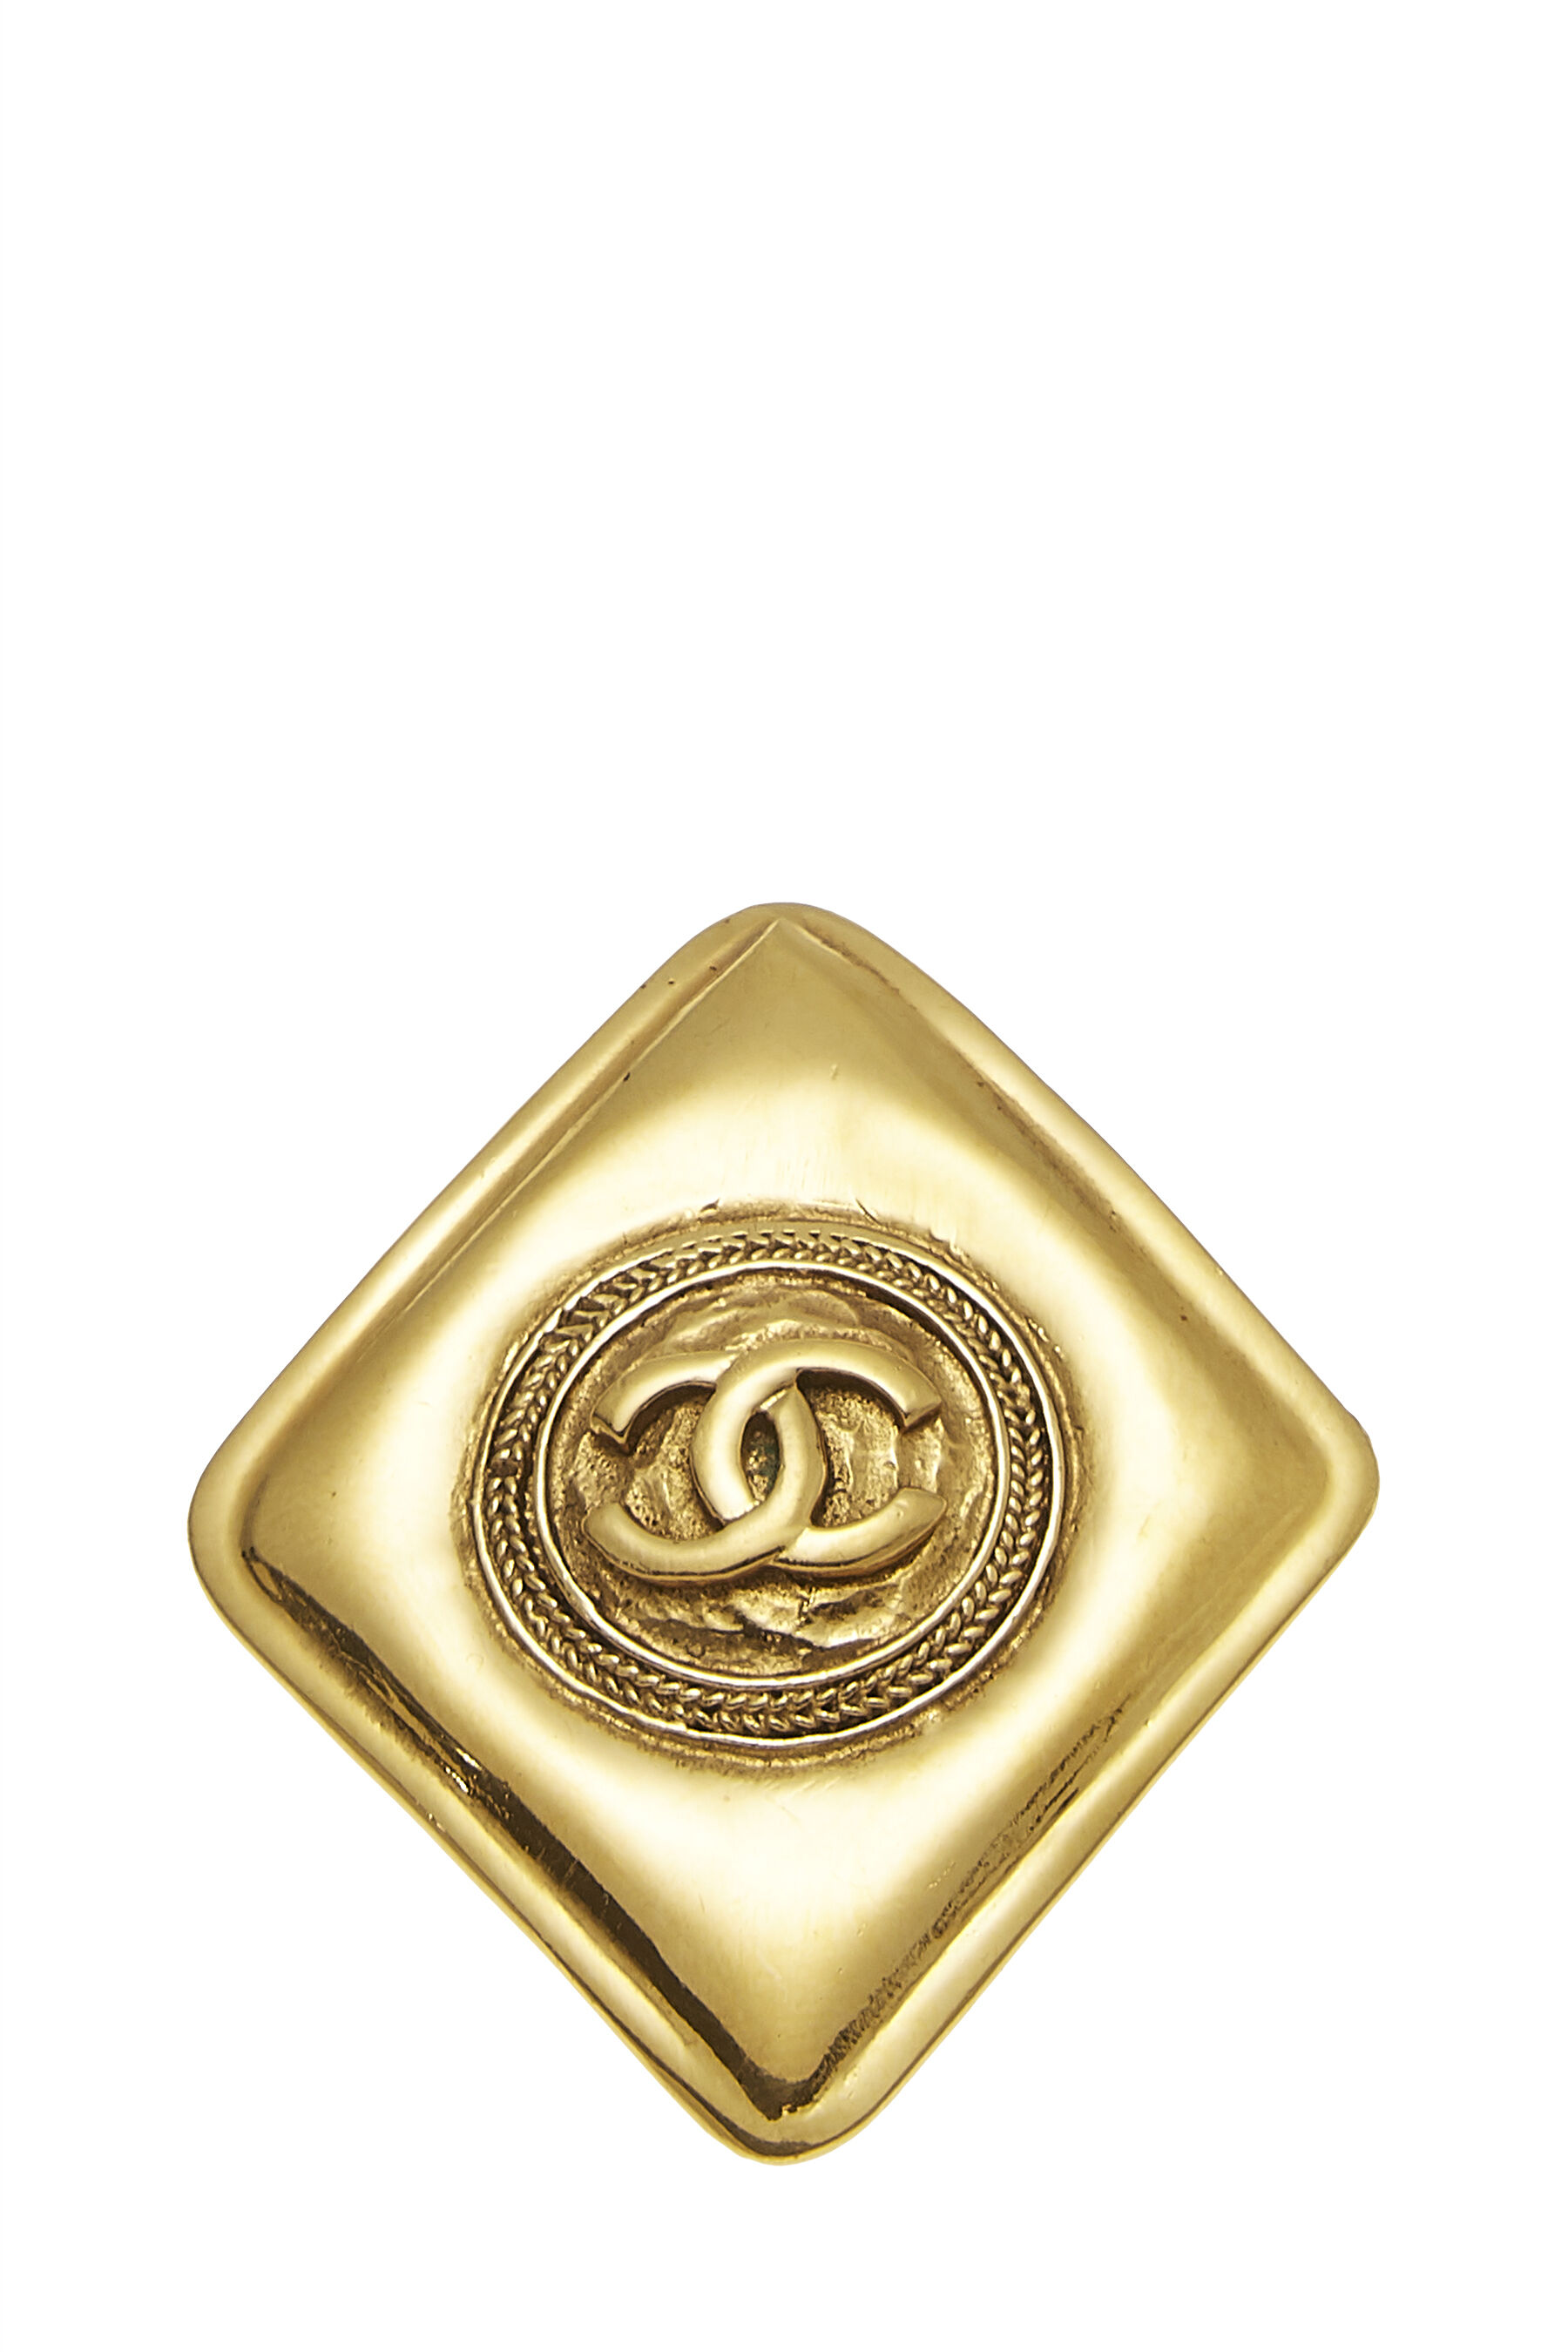 Chanel - Gold Diamond-Shaped 'CC' Pin